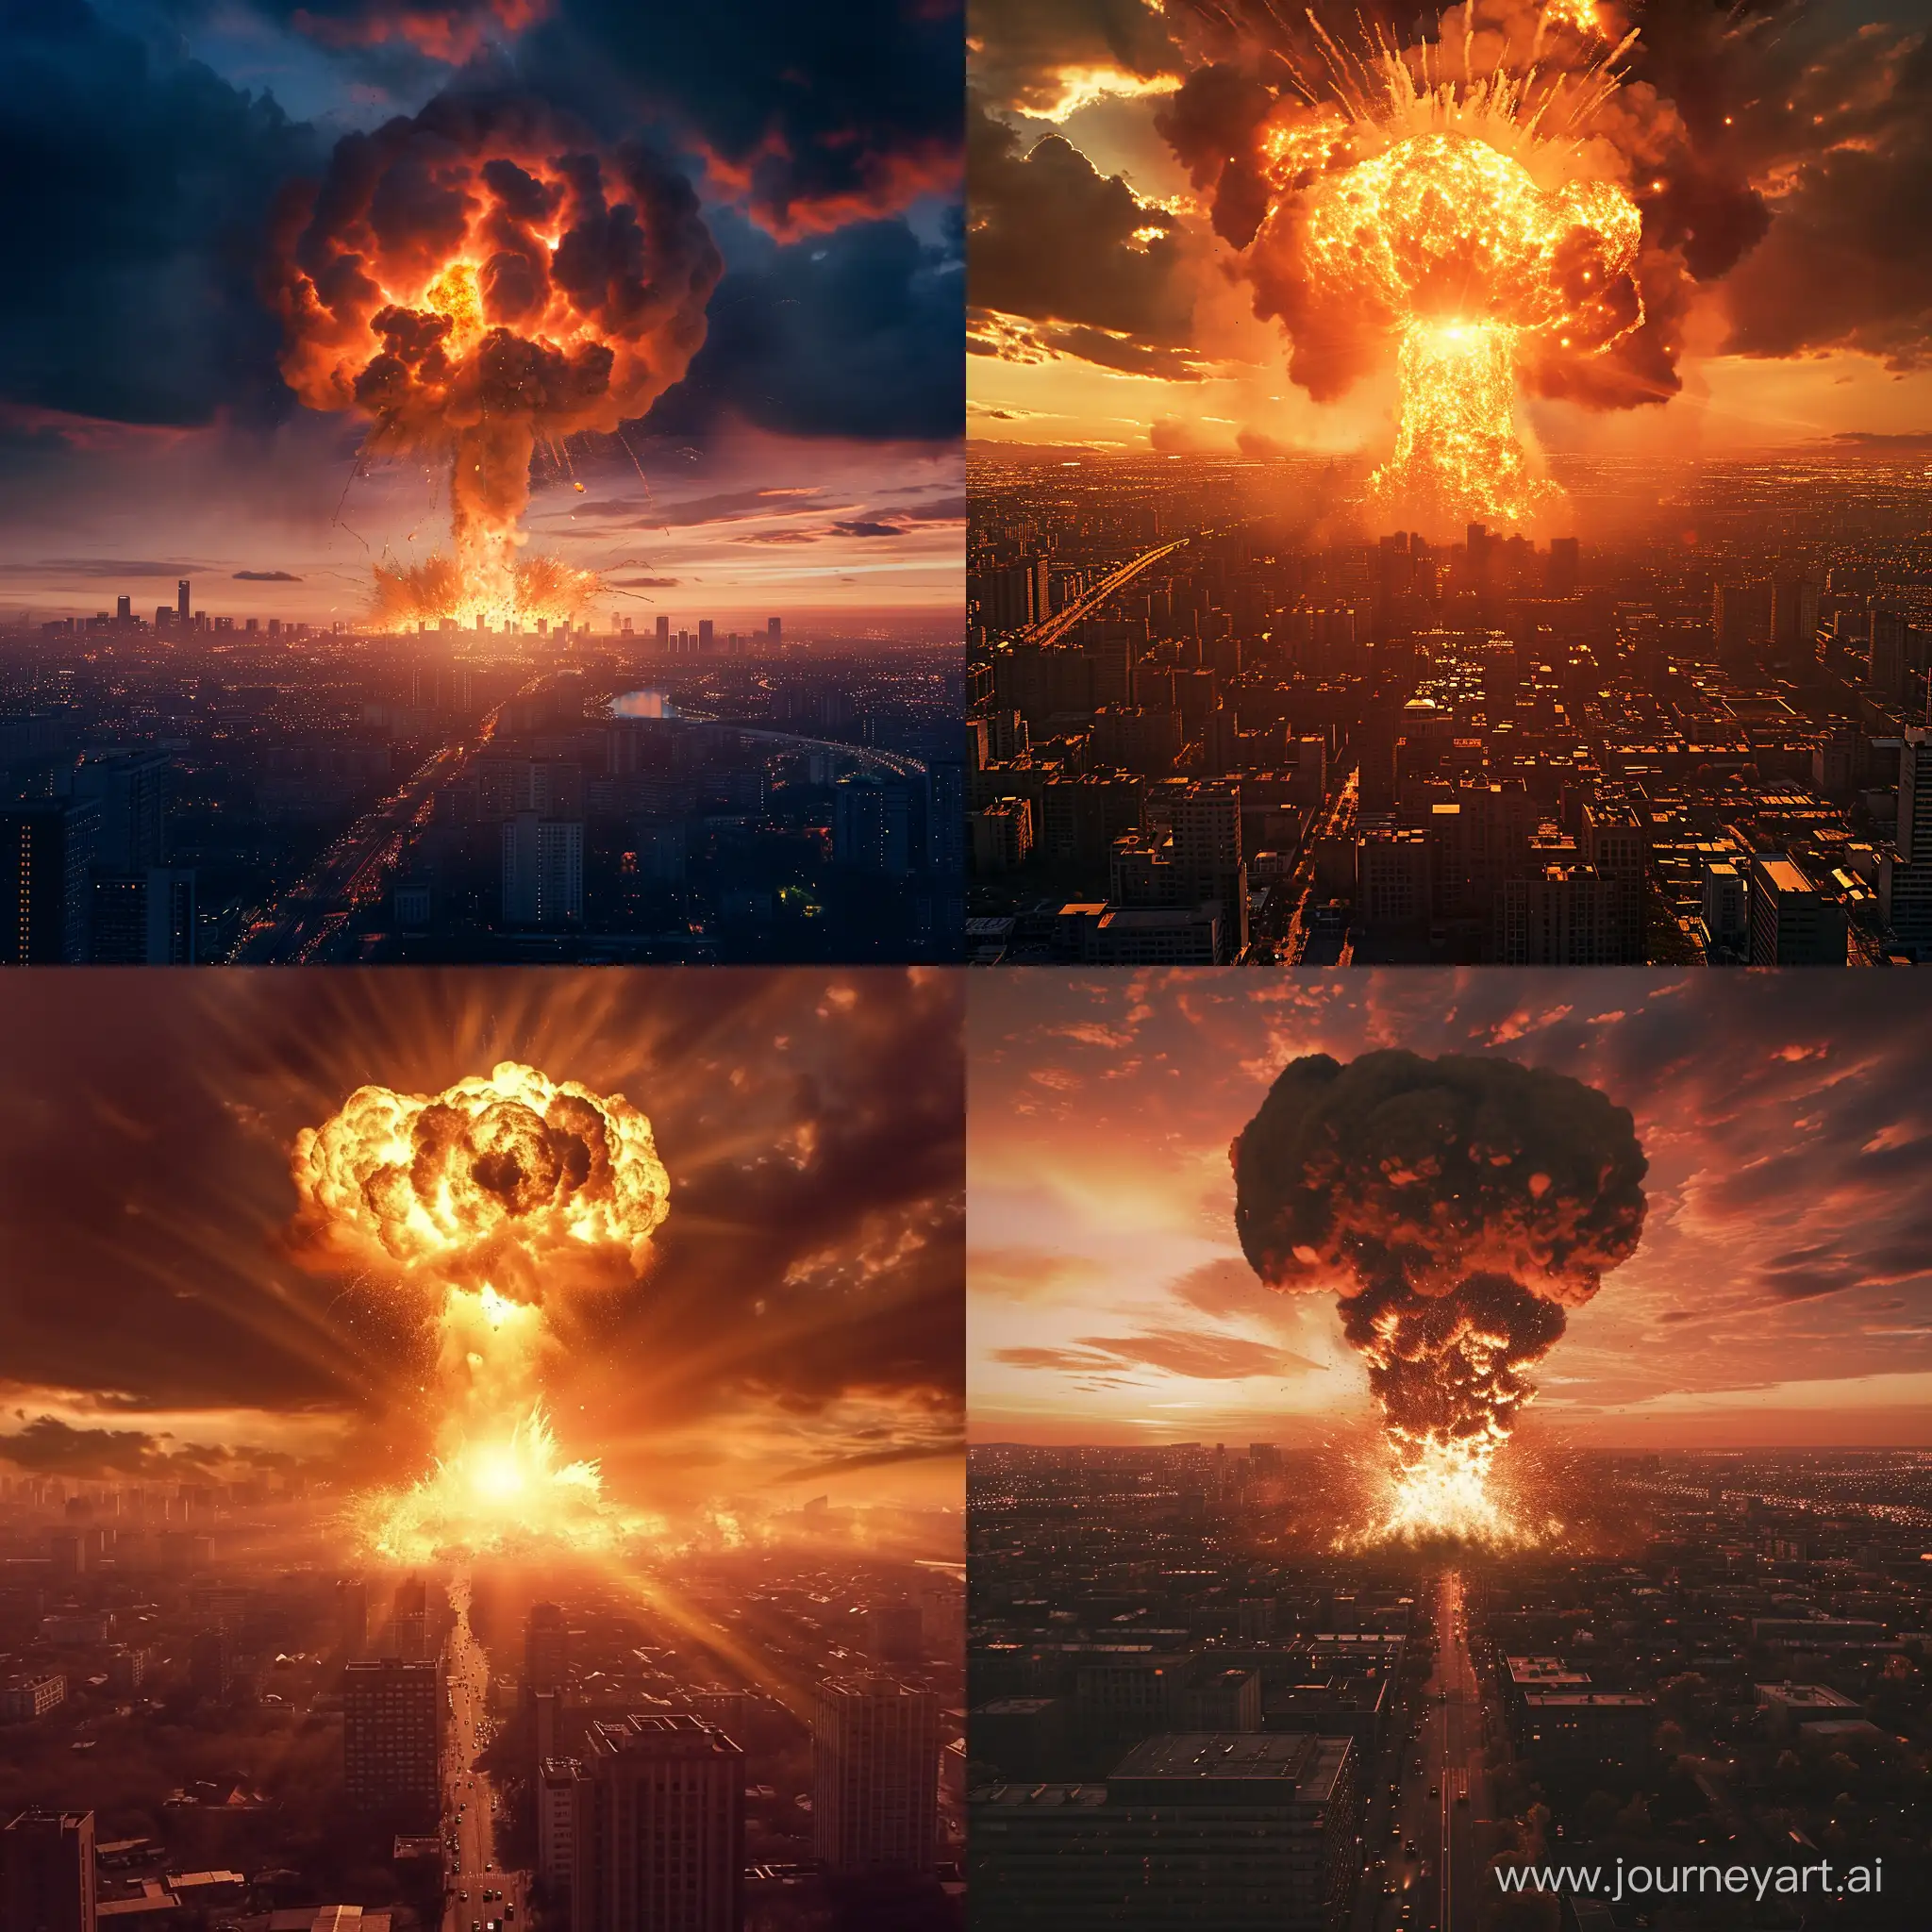 Urban-Catastrophe-Devastating-Nuclear-Explosion-Scene